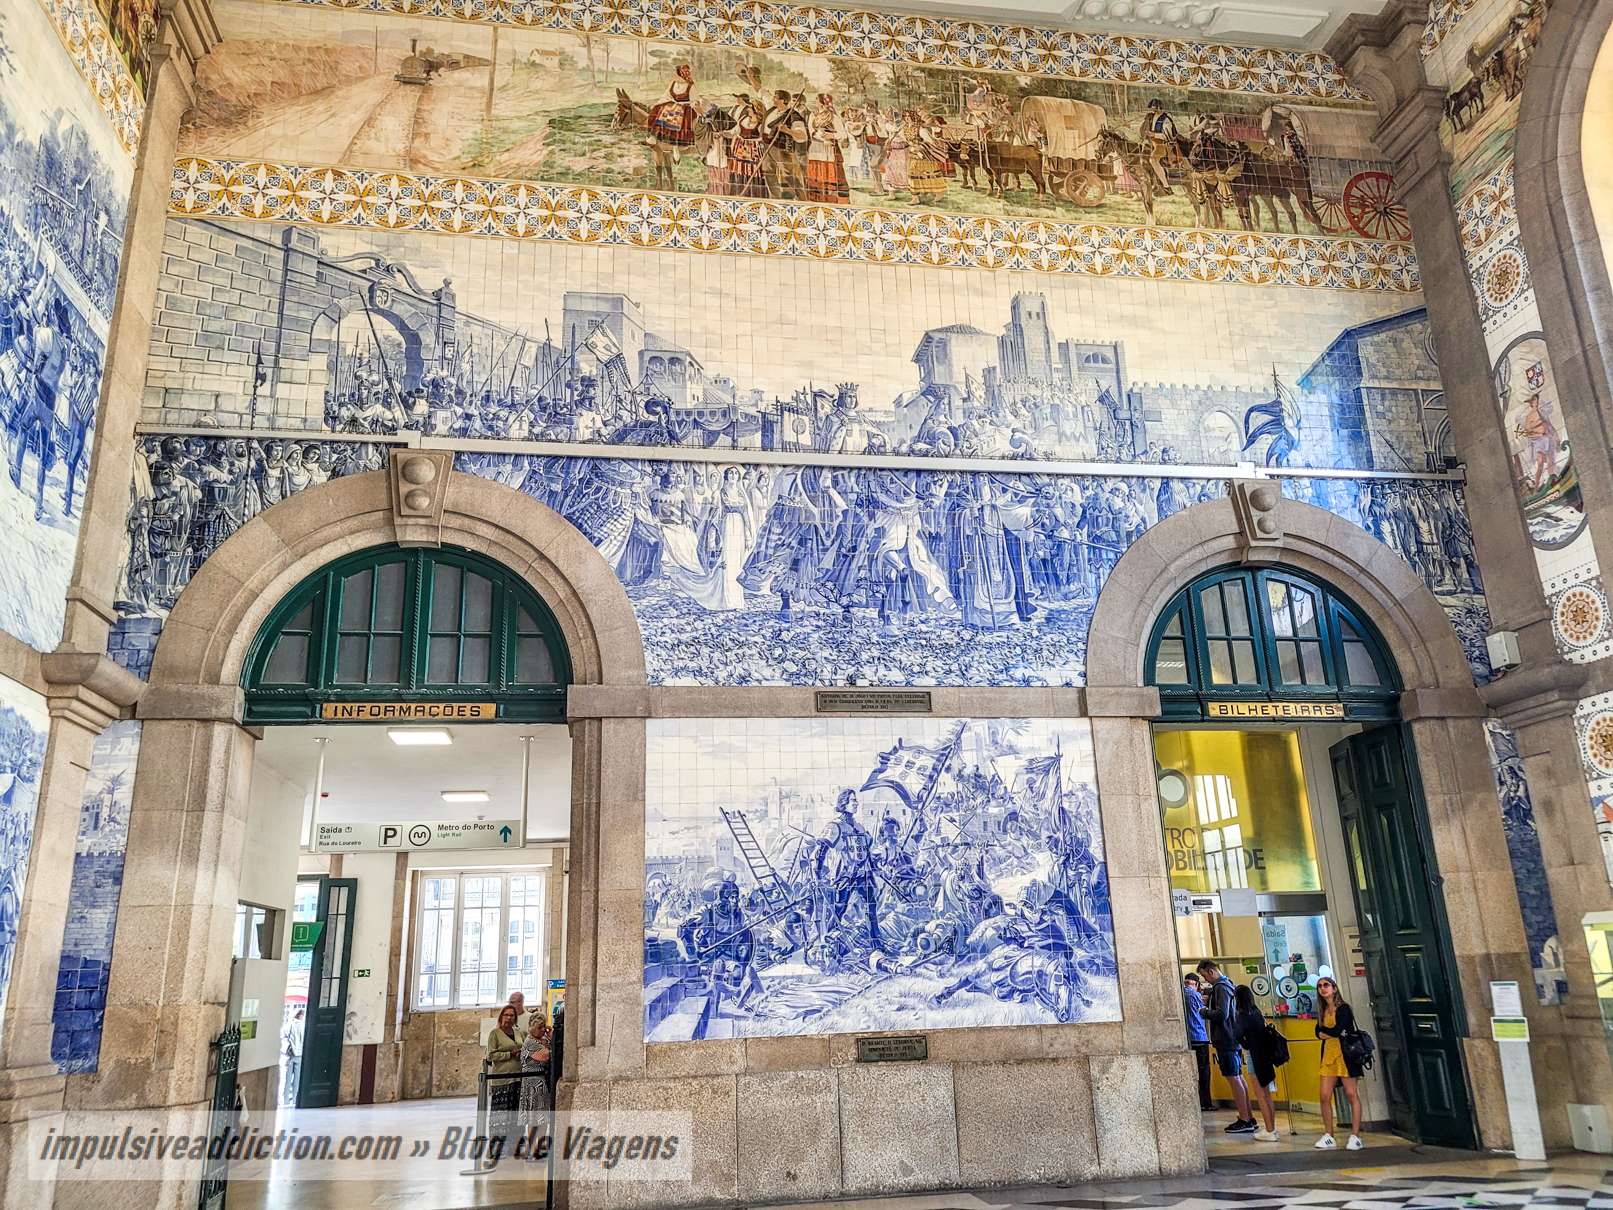 São Bento Station | Things to do in Porto